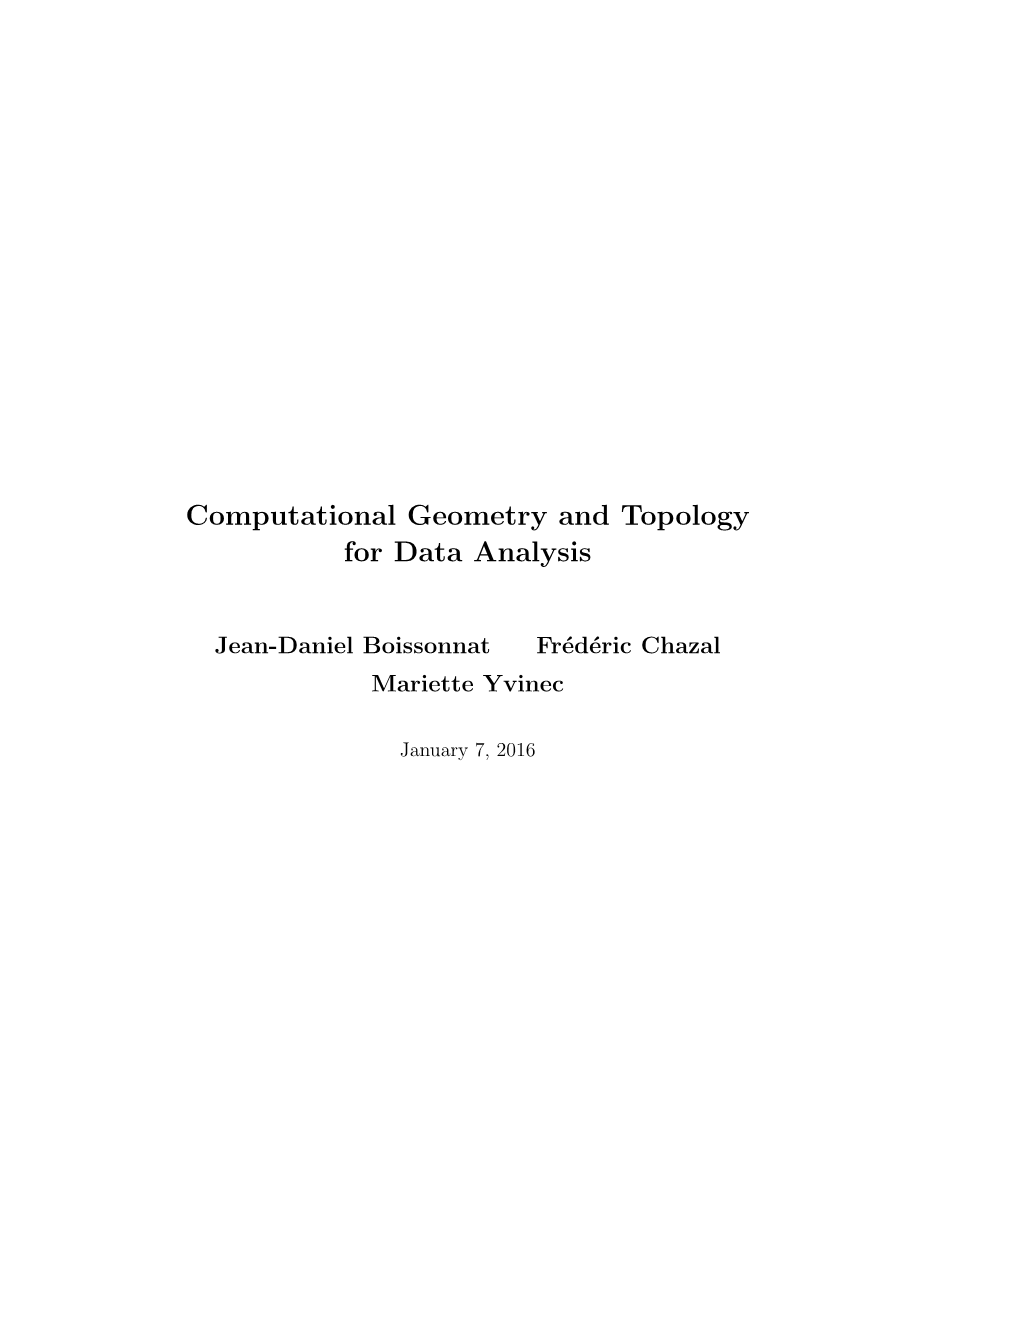 Computational Geometry and Topology for Data Analysis